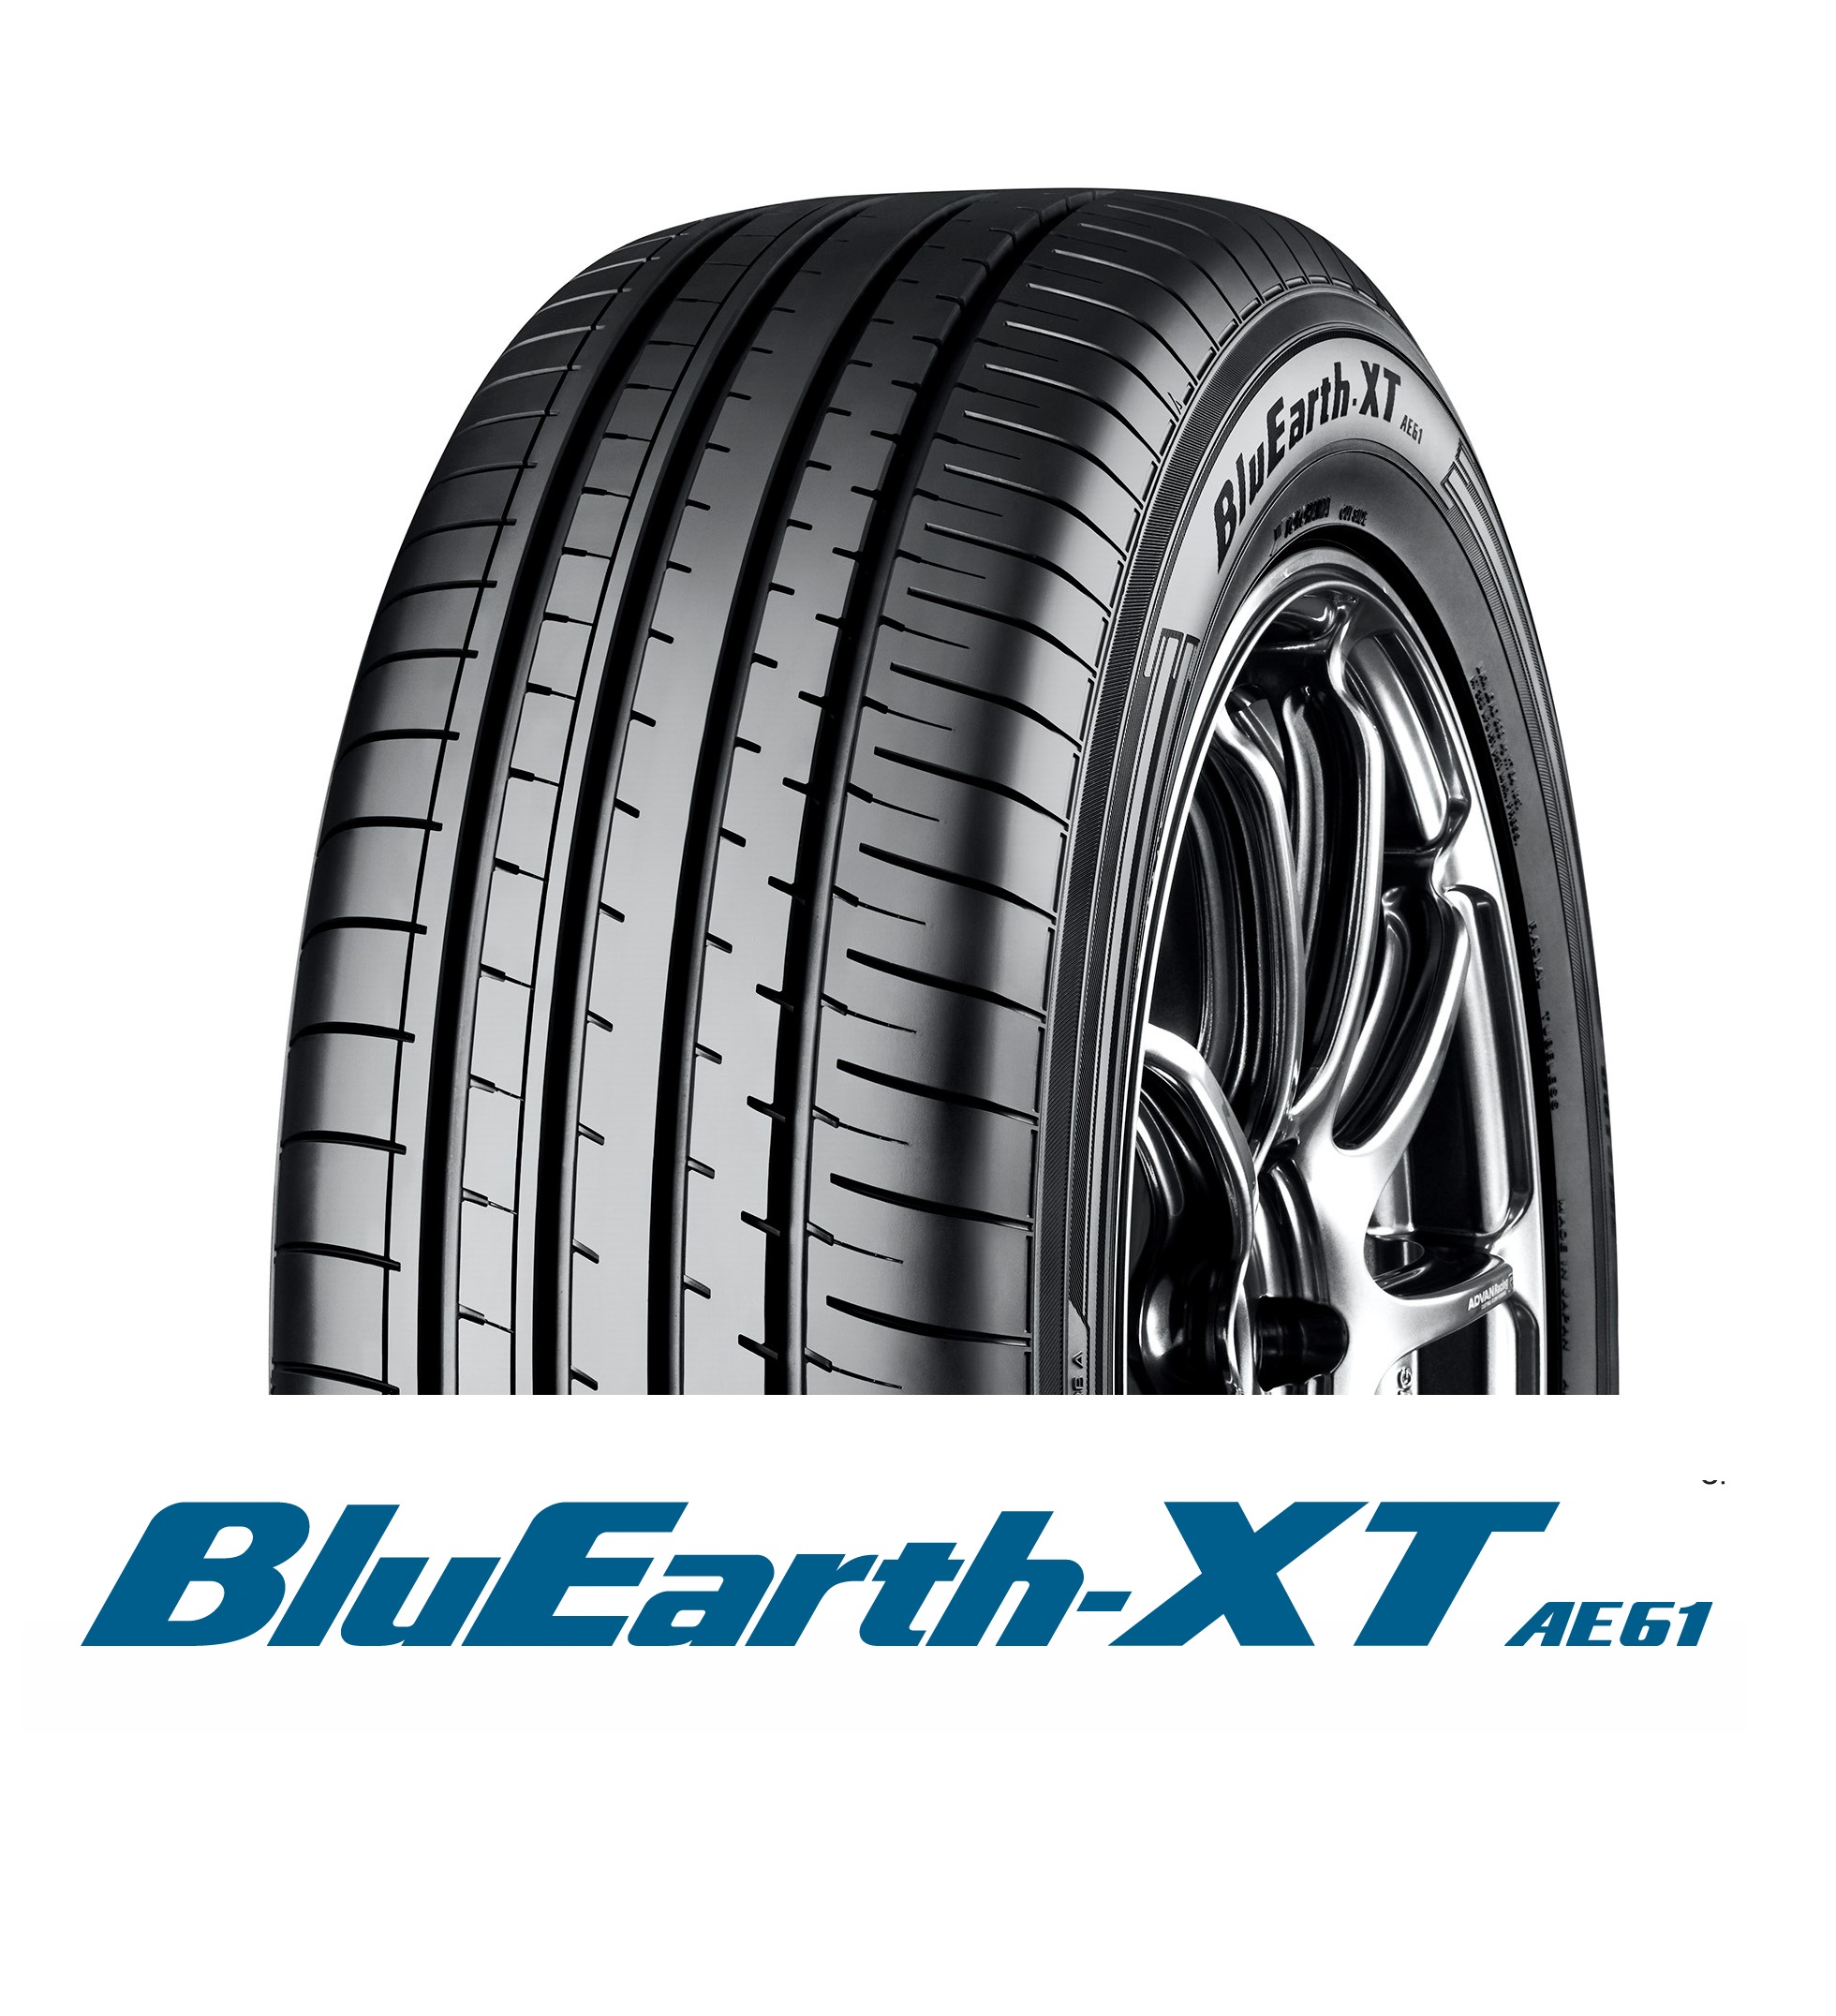 BluEarth-XT AE61 試乗記事まとめ | 自動車・タイヤ | Hello, world